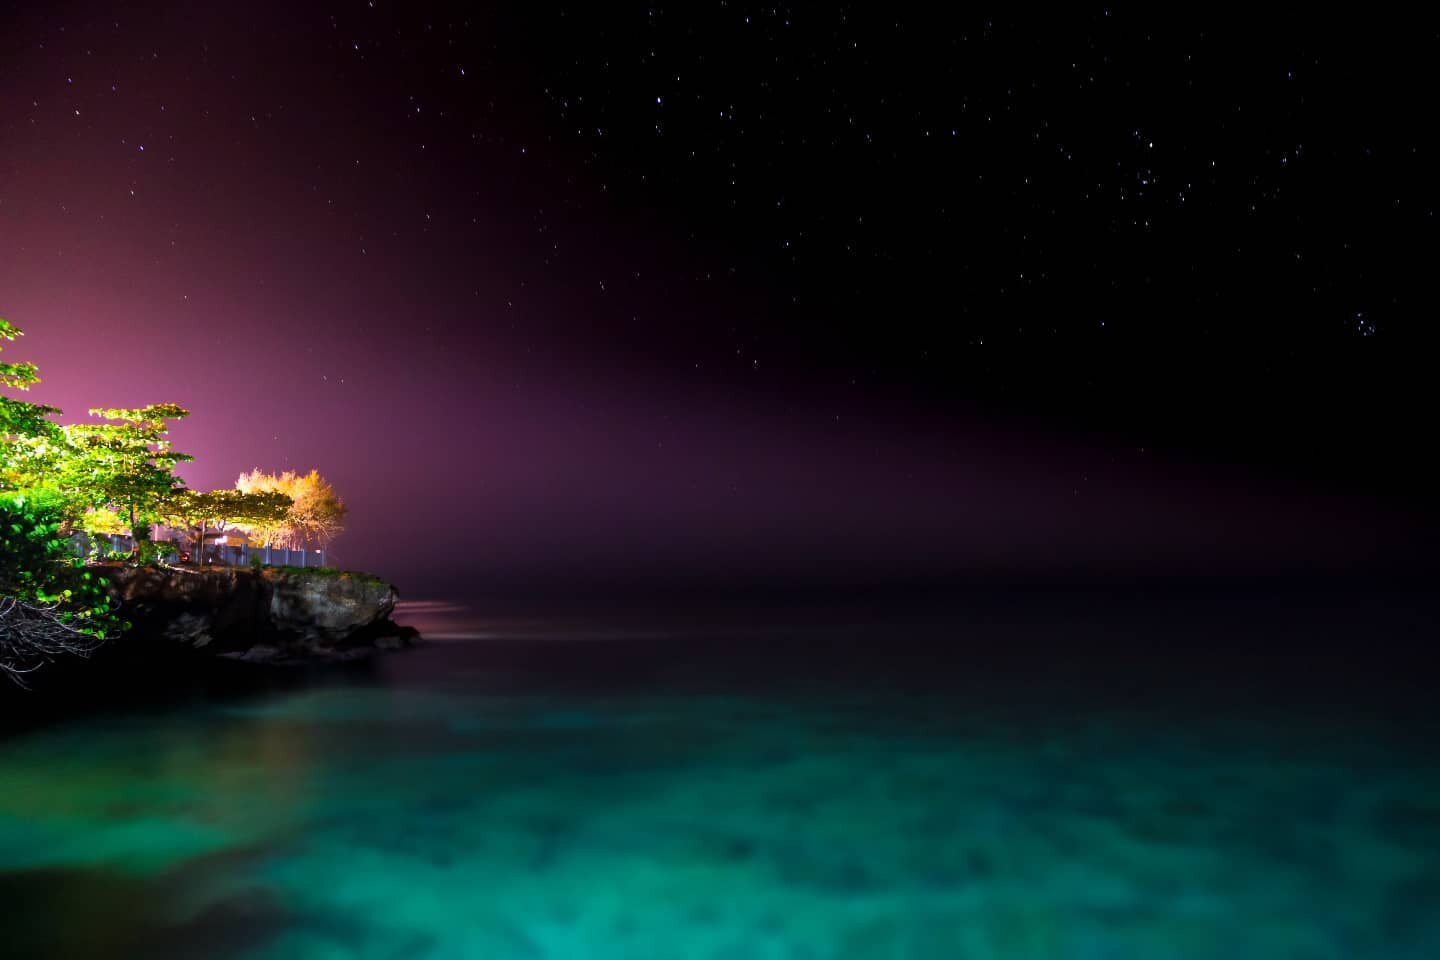 Oh Tobago how i miss thee. #NightScape #LightbridgeStudios #Landscape #Seascape #StarryNight #Glow #Nature #Ocean